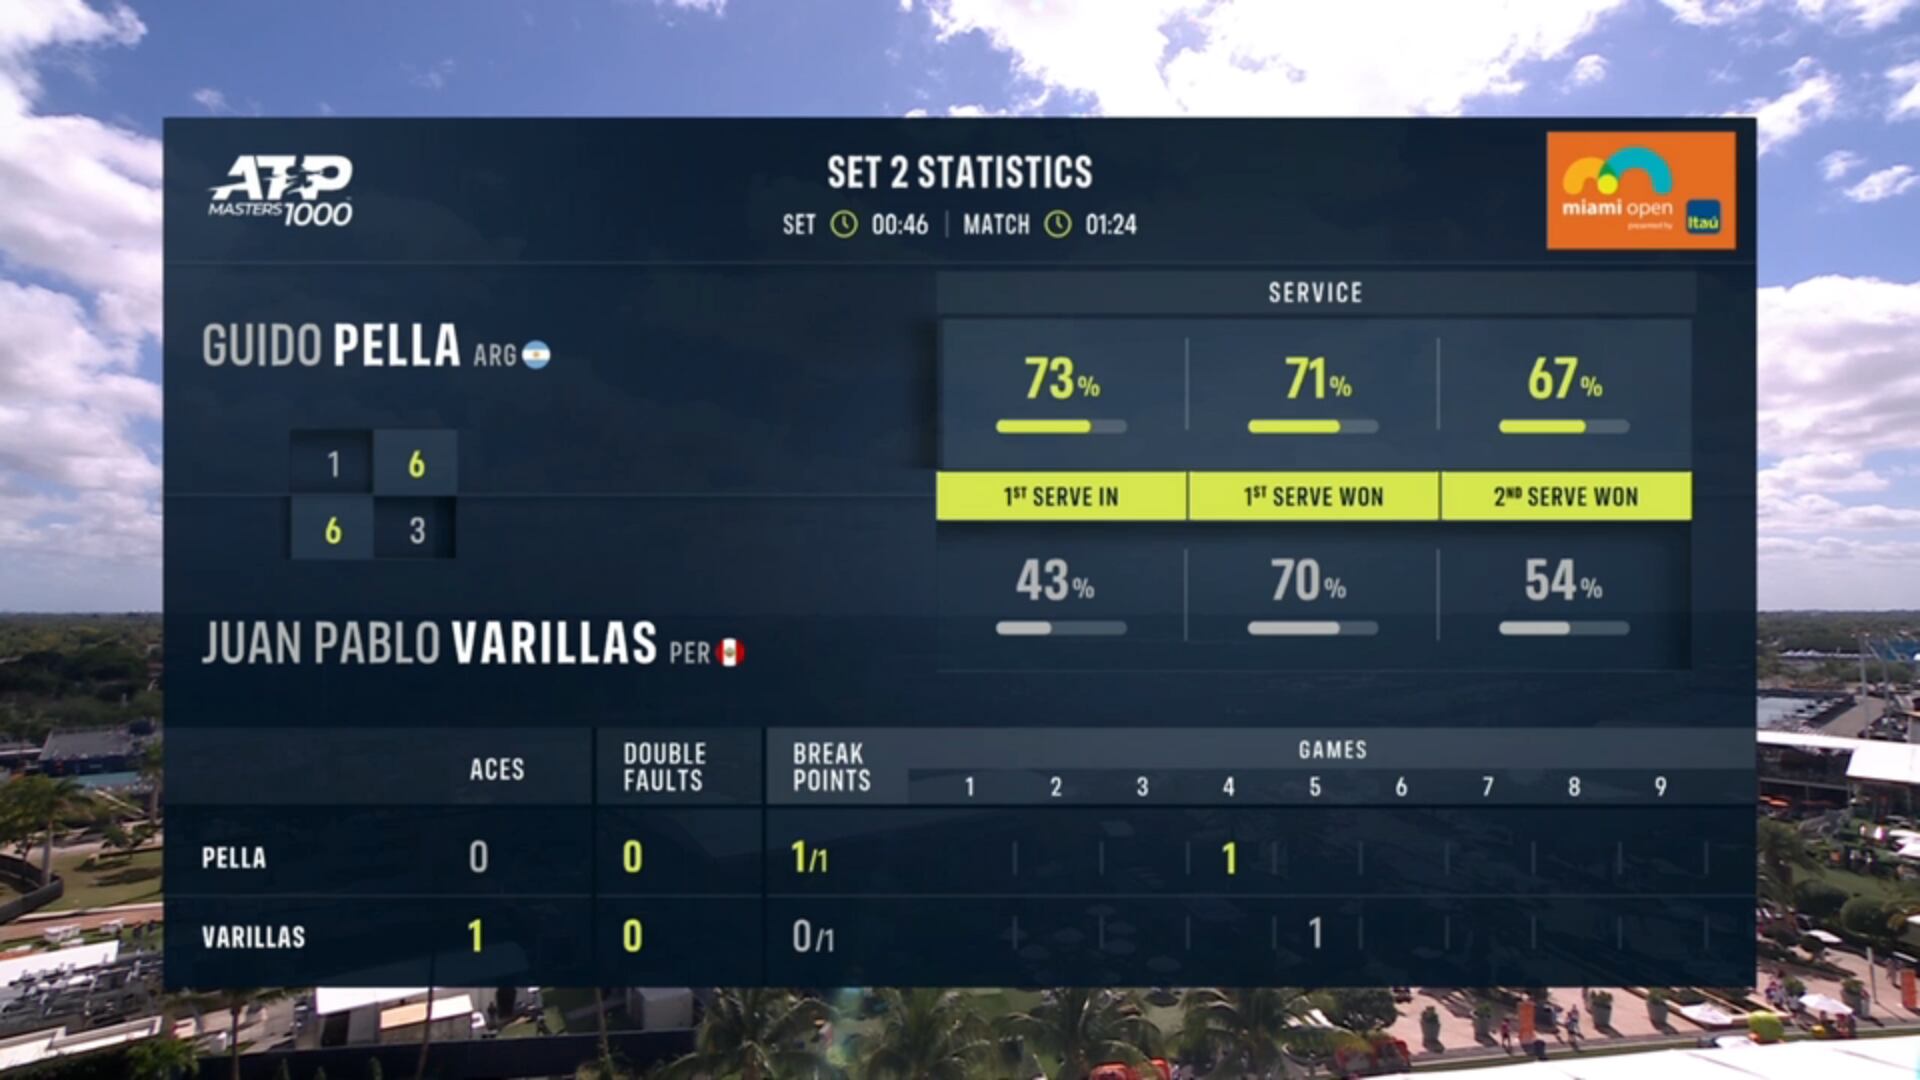 Statistics of Juan Pablo Varillas during the second set.